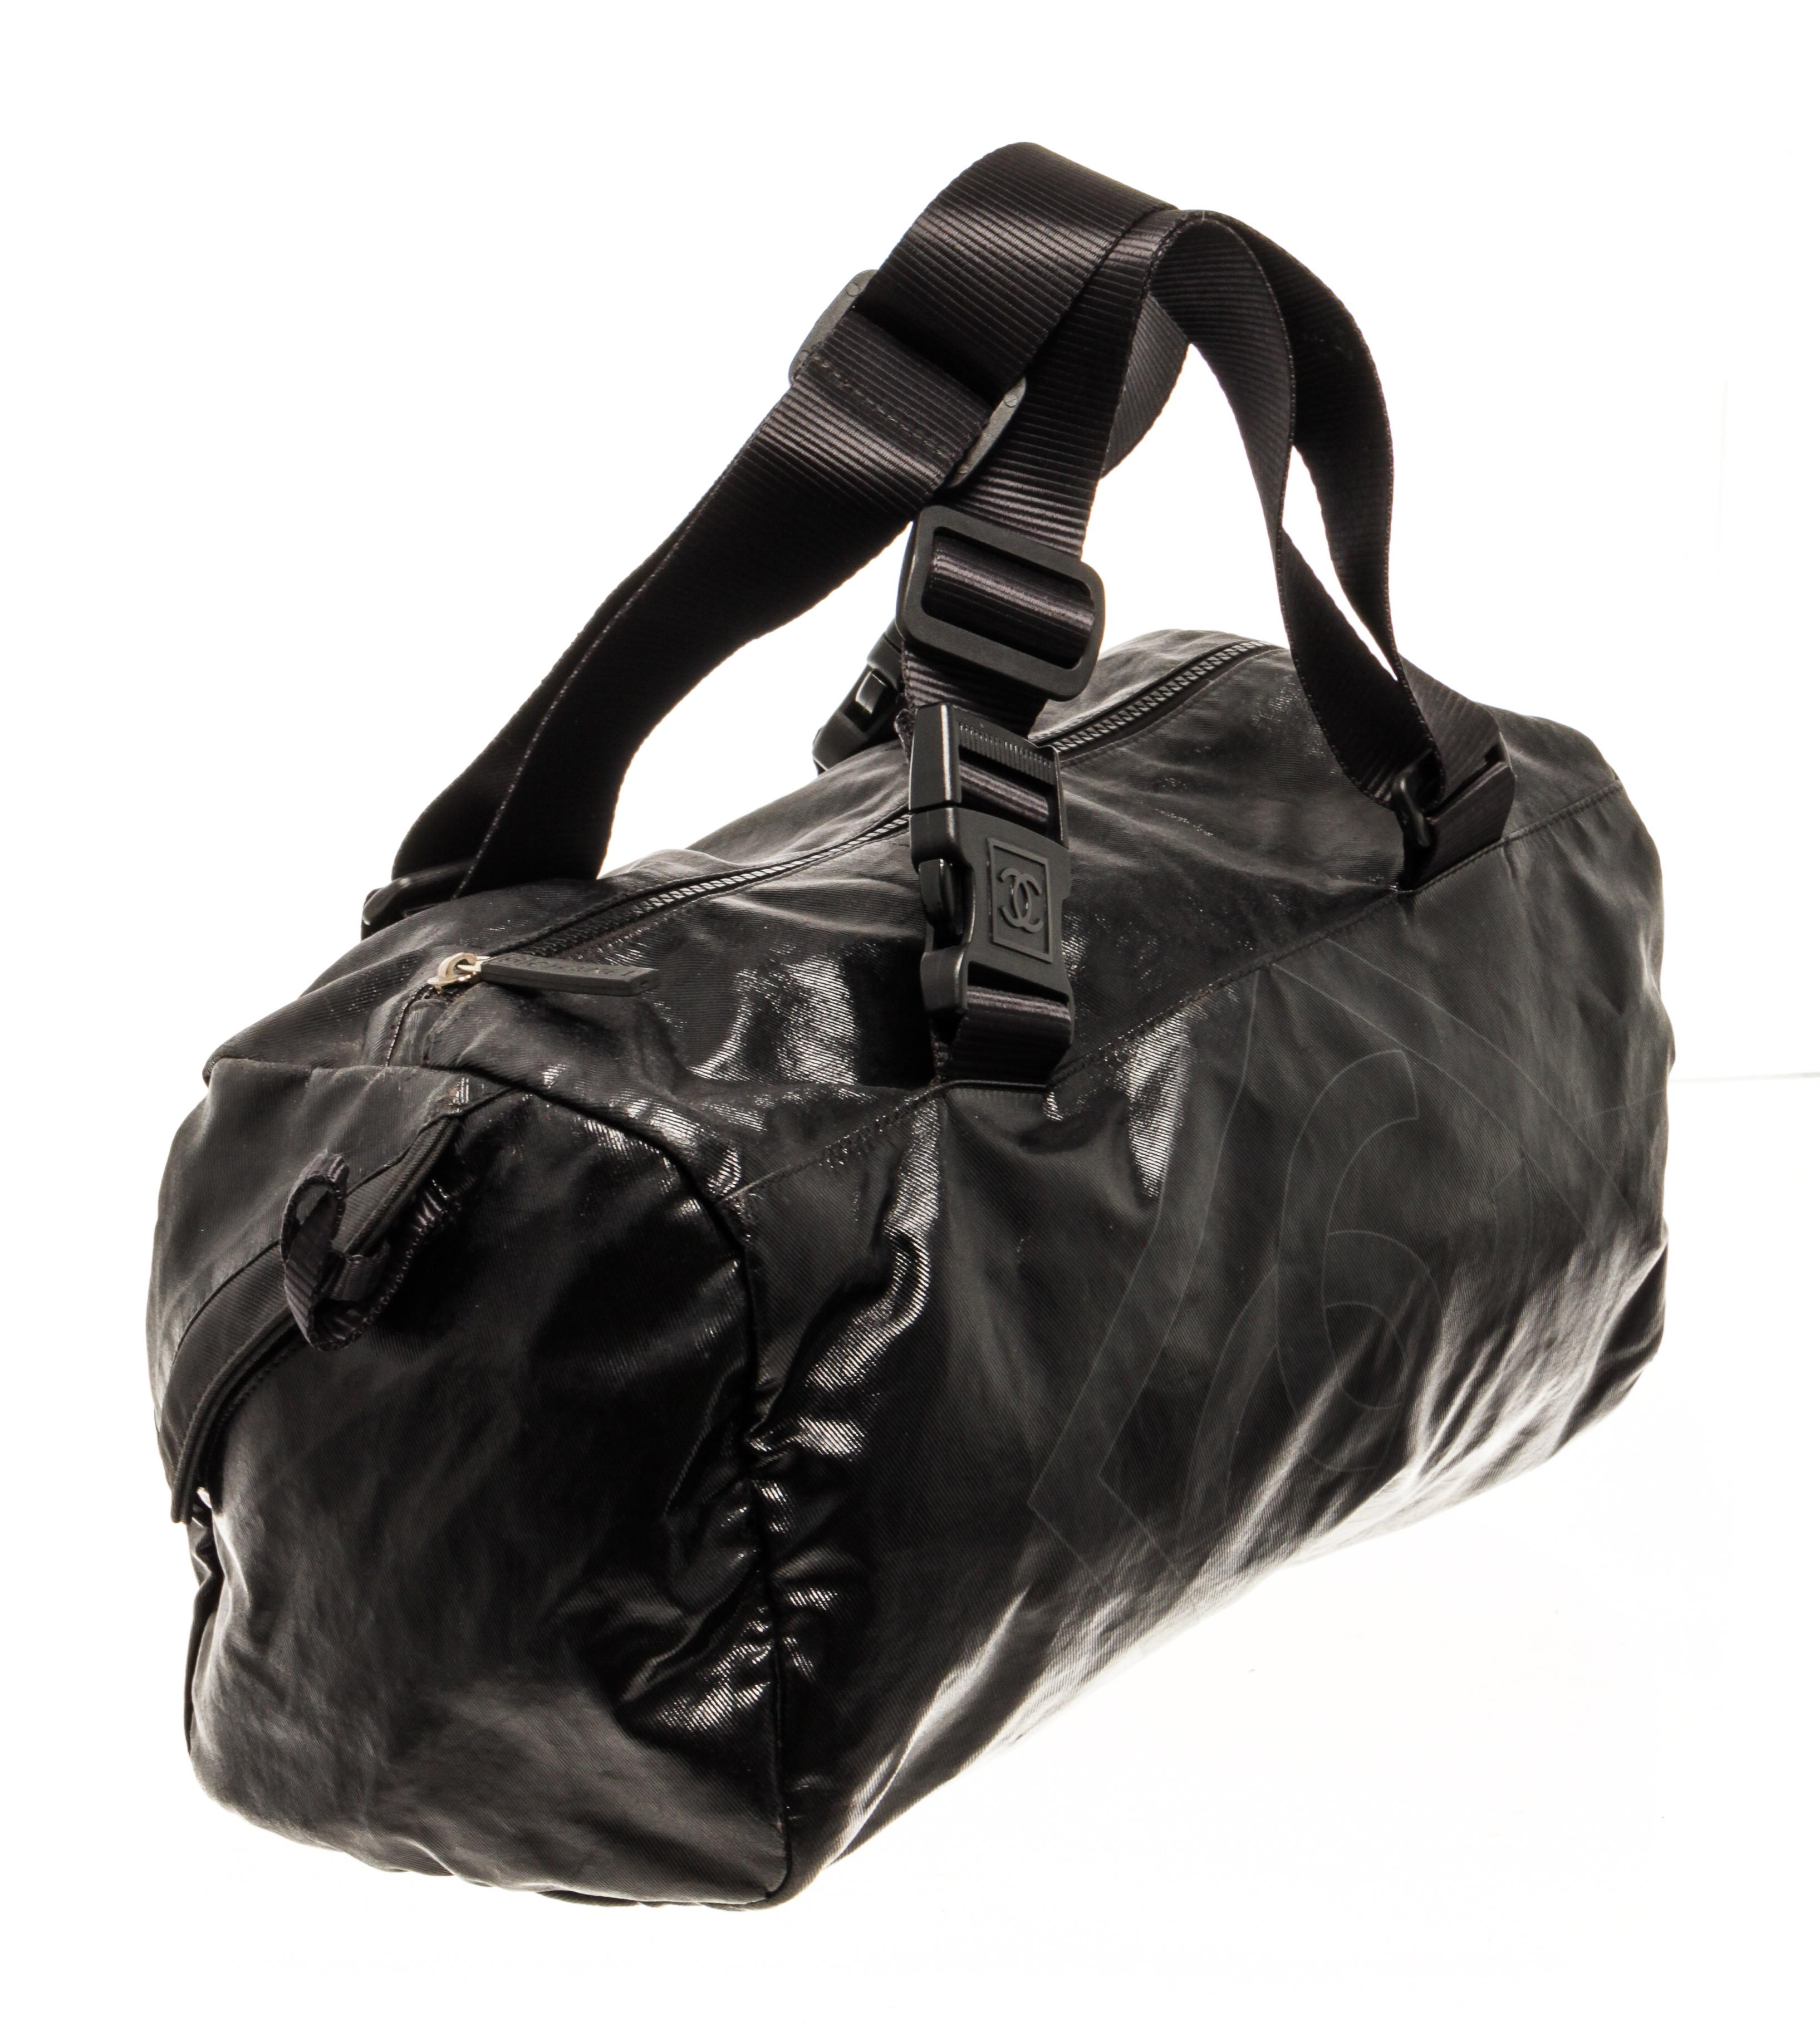 Chanel Sport Line nylon duffel bag with flat adjustable top handles, decorative buckles, interlocking Chanel logo, one interior zip pocket, and zipper closure.

80499MSC